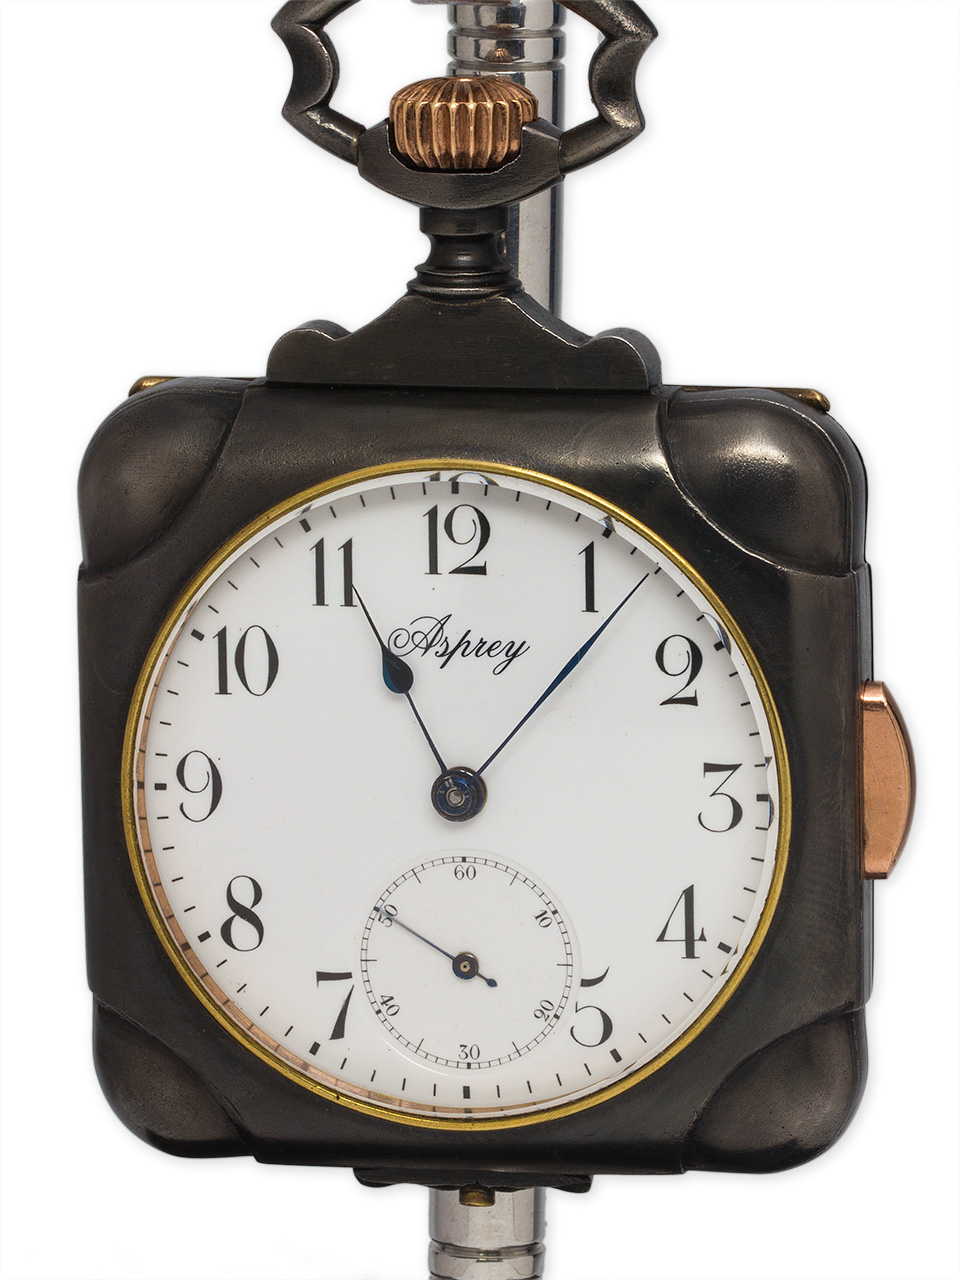 Asprey 1/4 Hour Repeater Travel Watch circa 1910